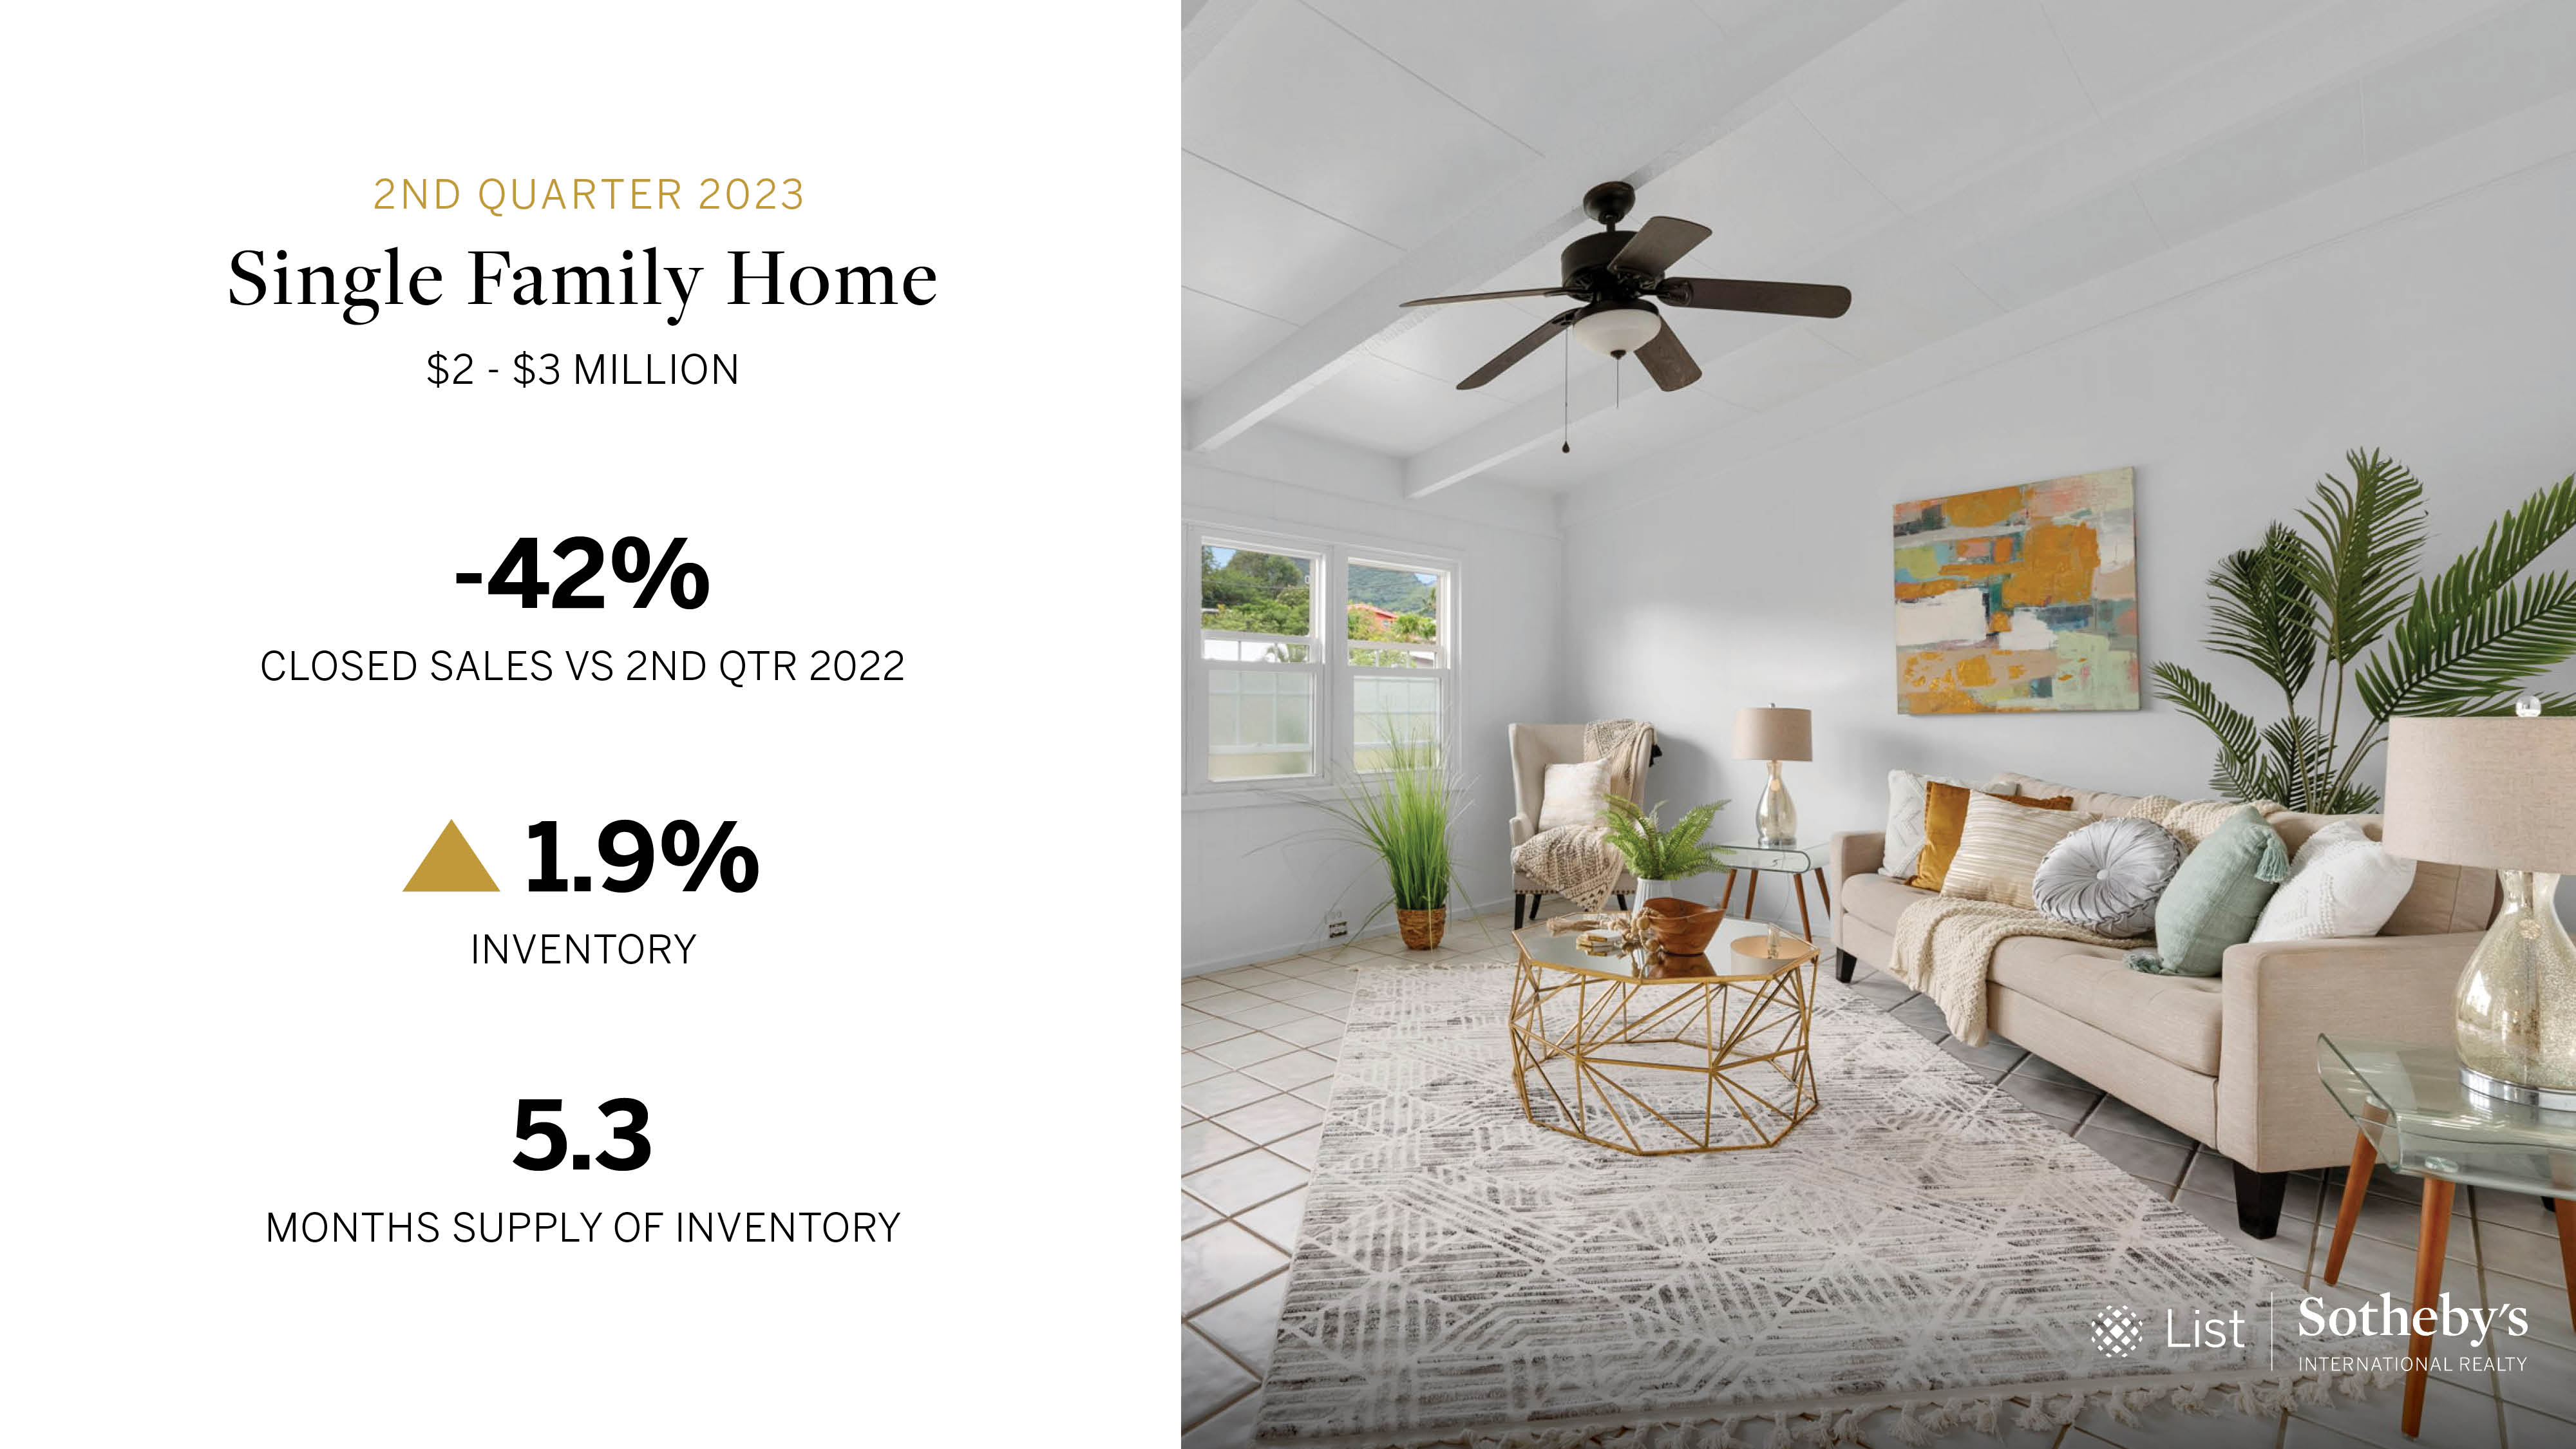 Single Family Home First Price Segment